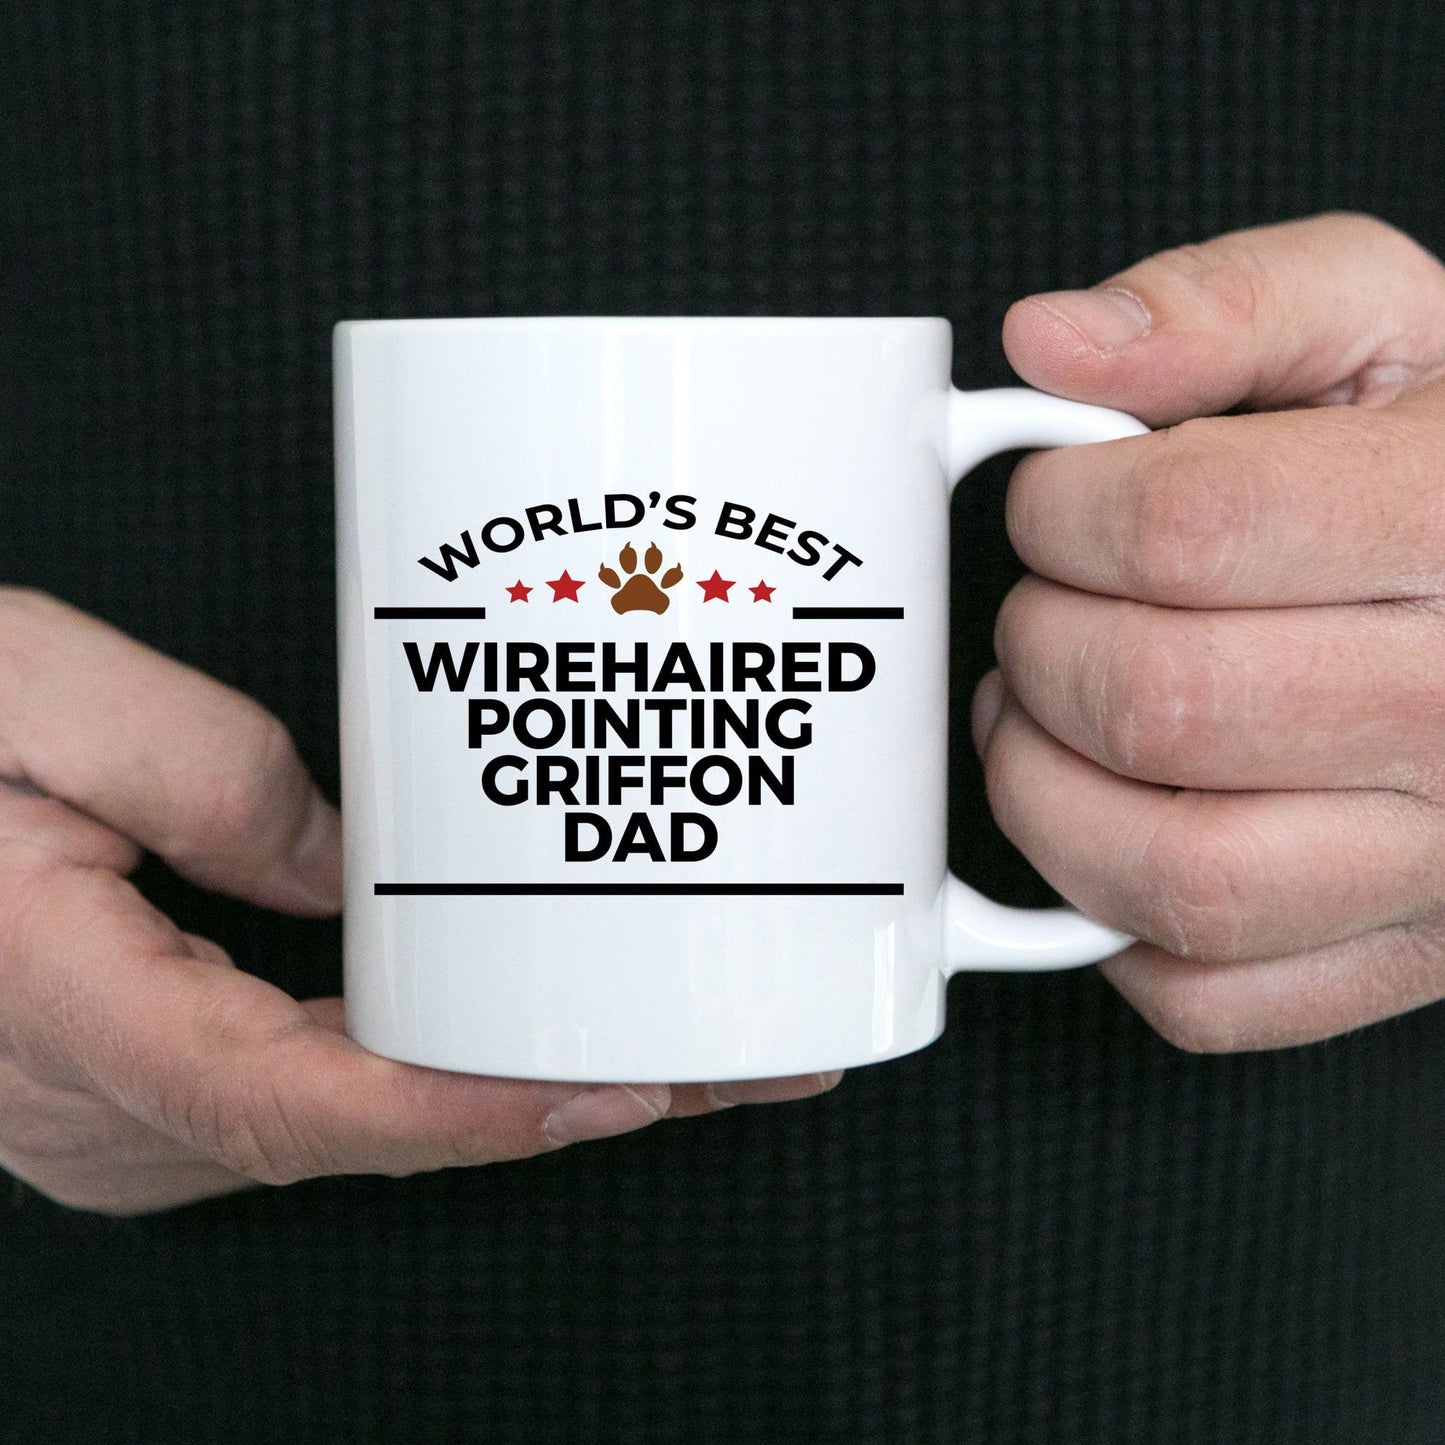 Wirehaired Pointing Griffon Dog Dad Mug